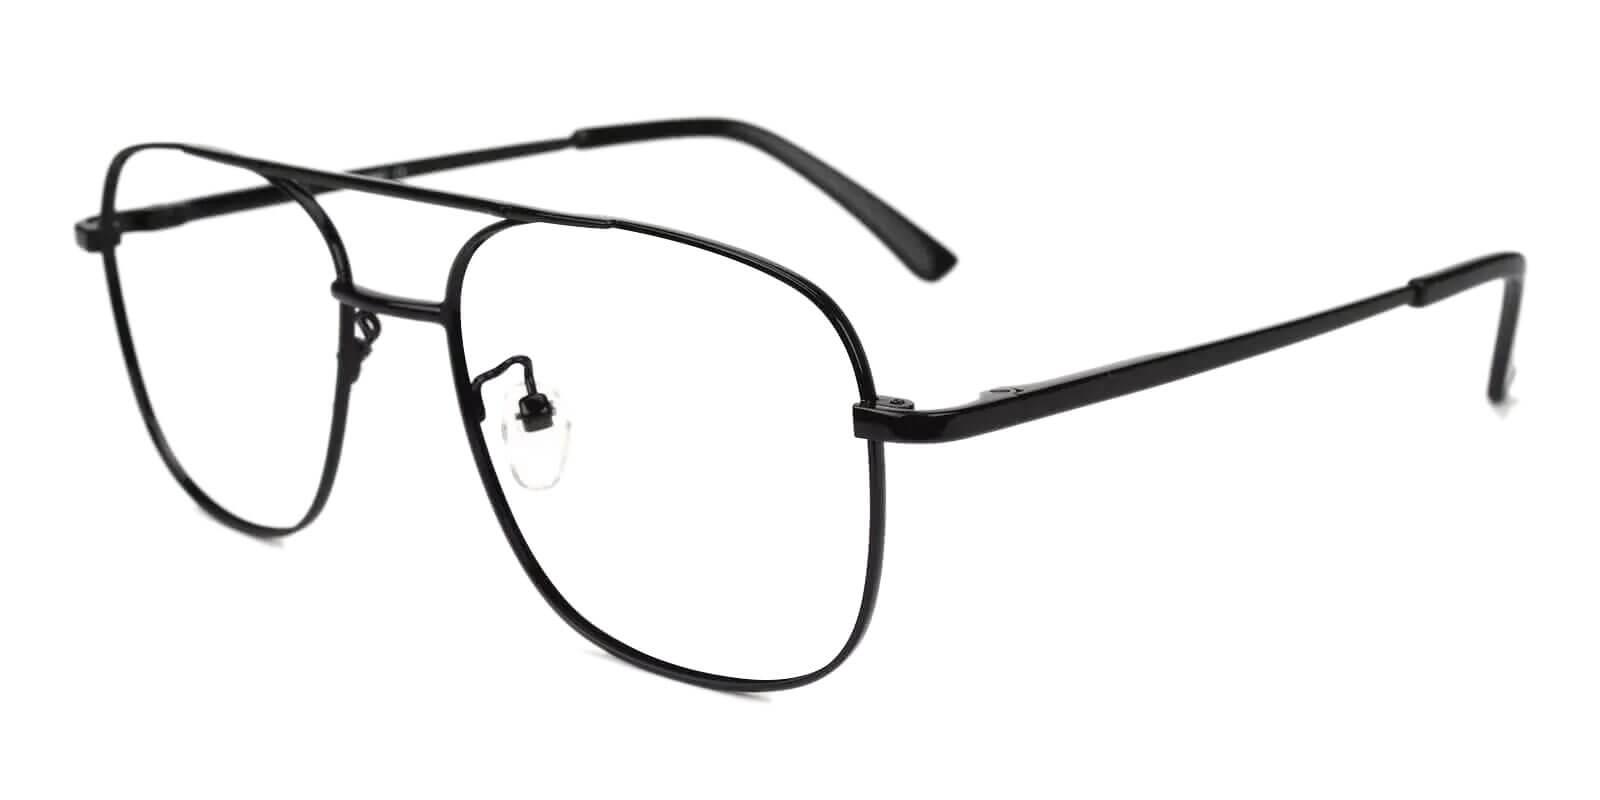 Gatewood  Black Metal Eyeglasses , NosePads , SpringHinges Frames from ABBE Glasses